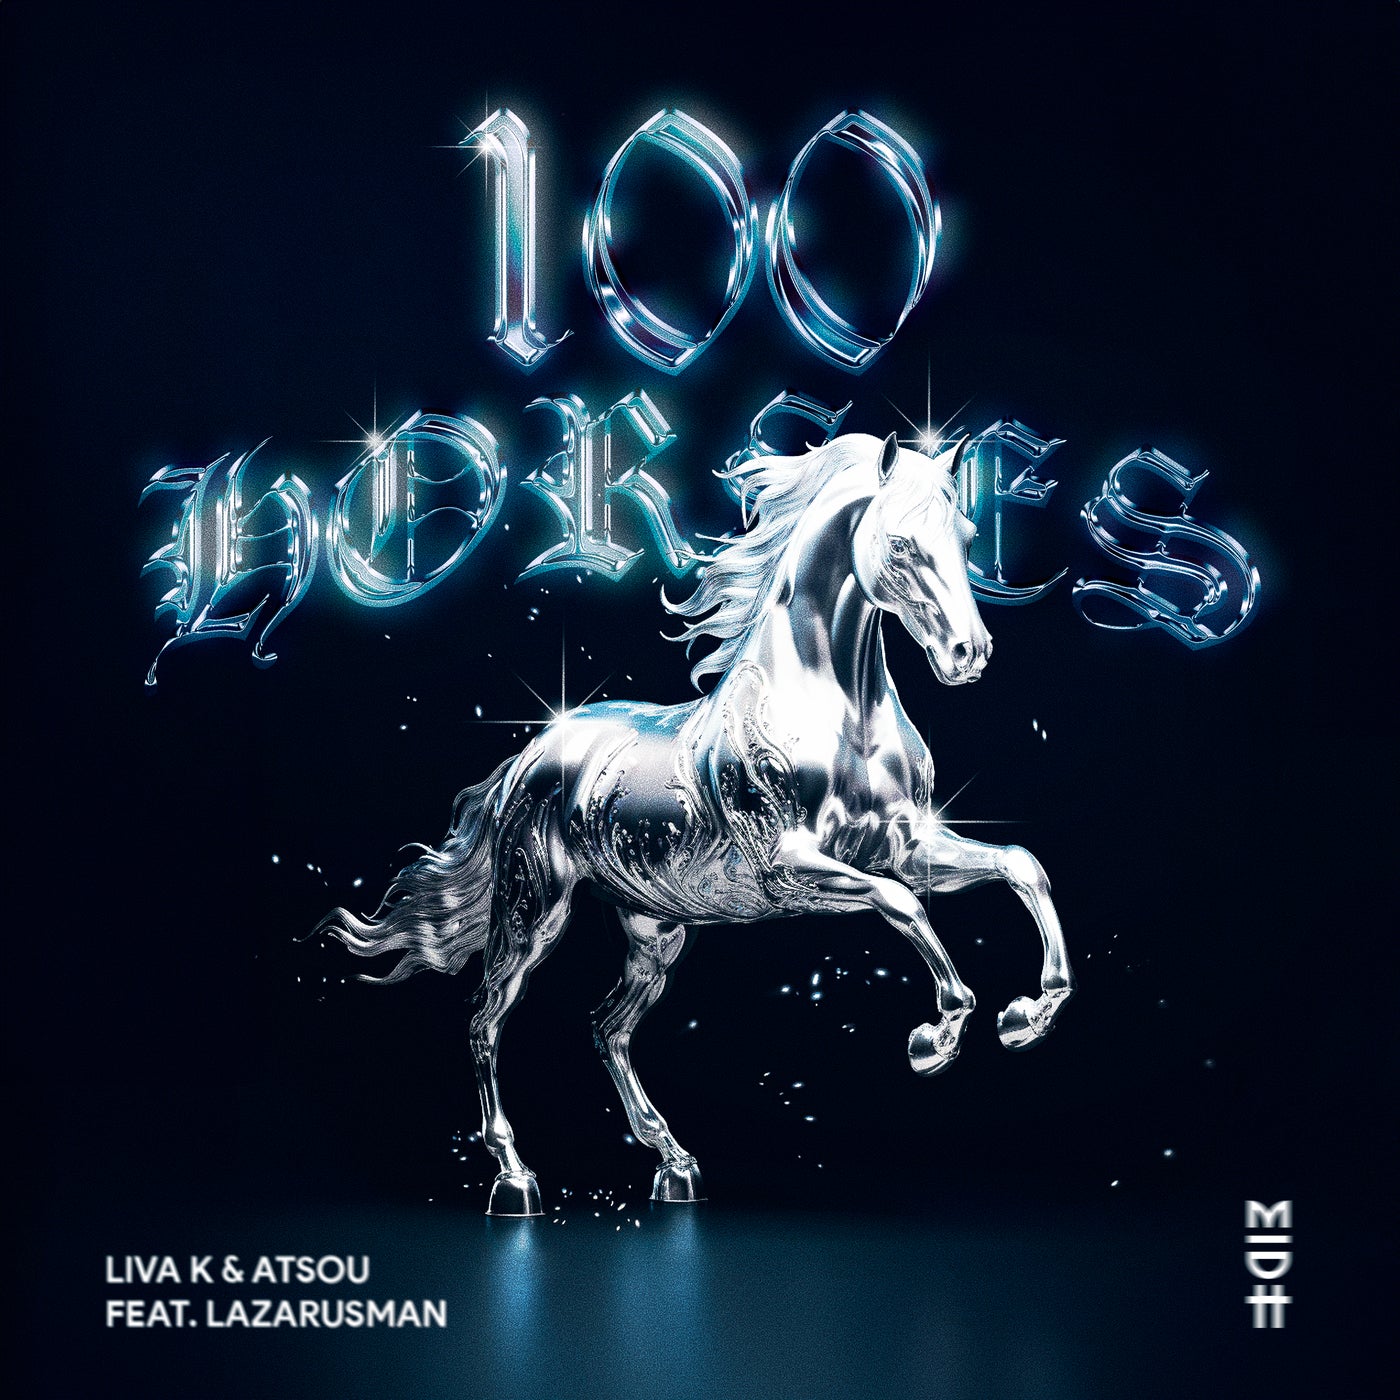 100 Horses